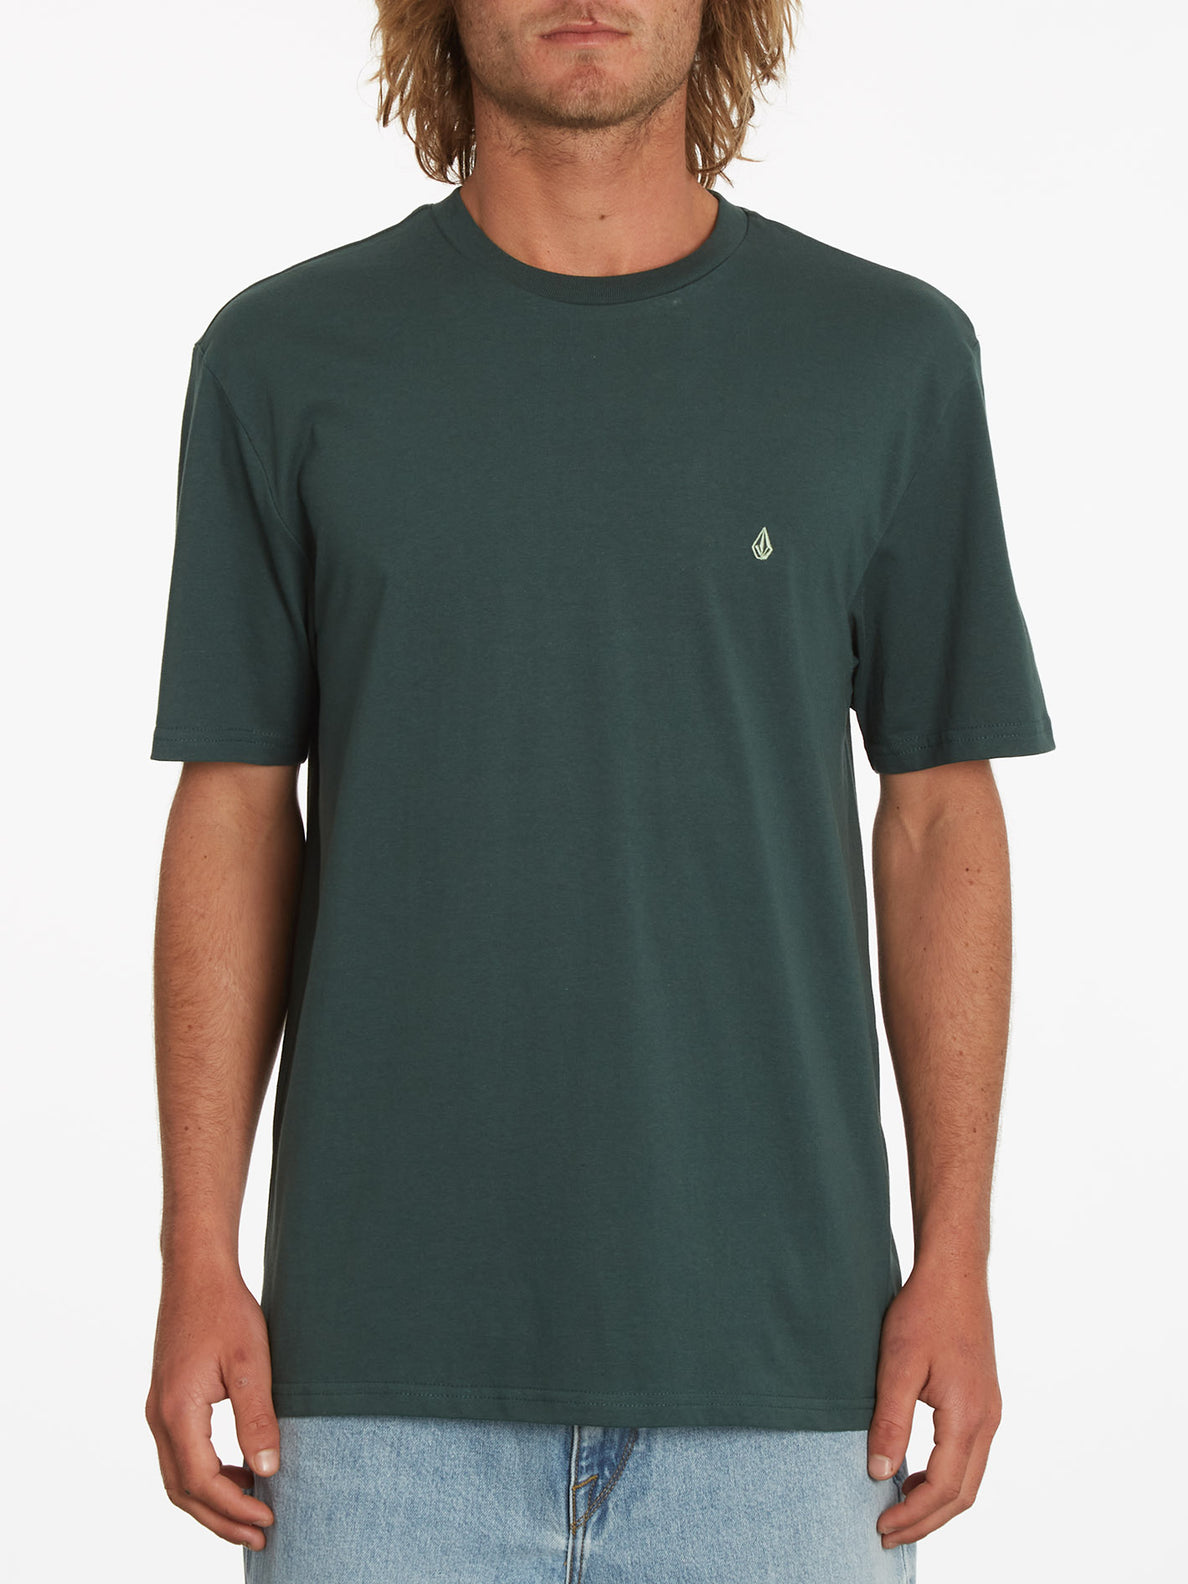 Replay Designer T-shirts Men's T-Shirt with Short Sleeve